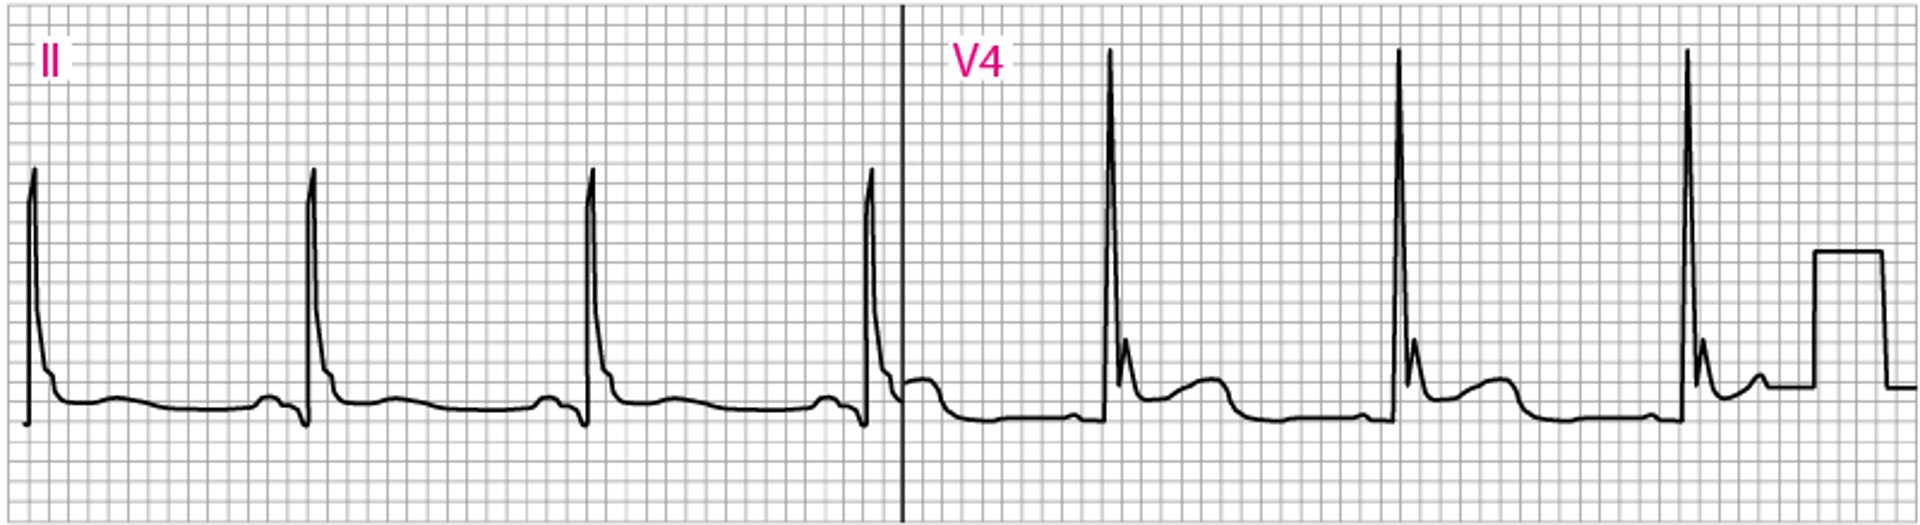 Abnormales EKG, J-(Osborn)-Wellen darstellend (V4)